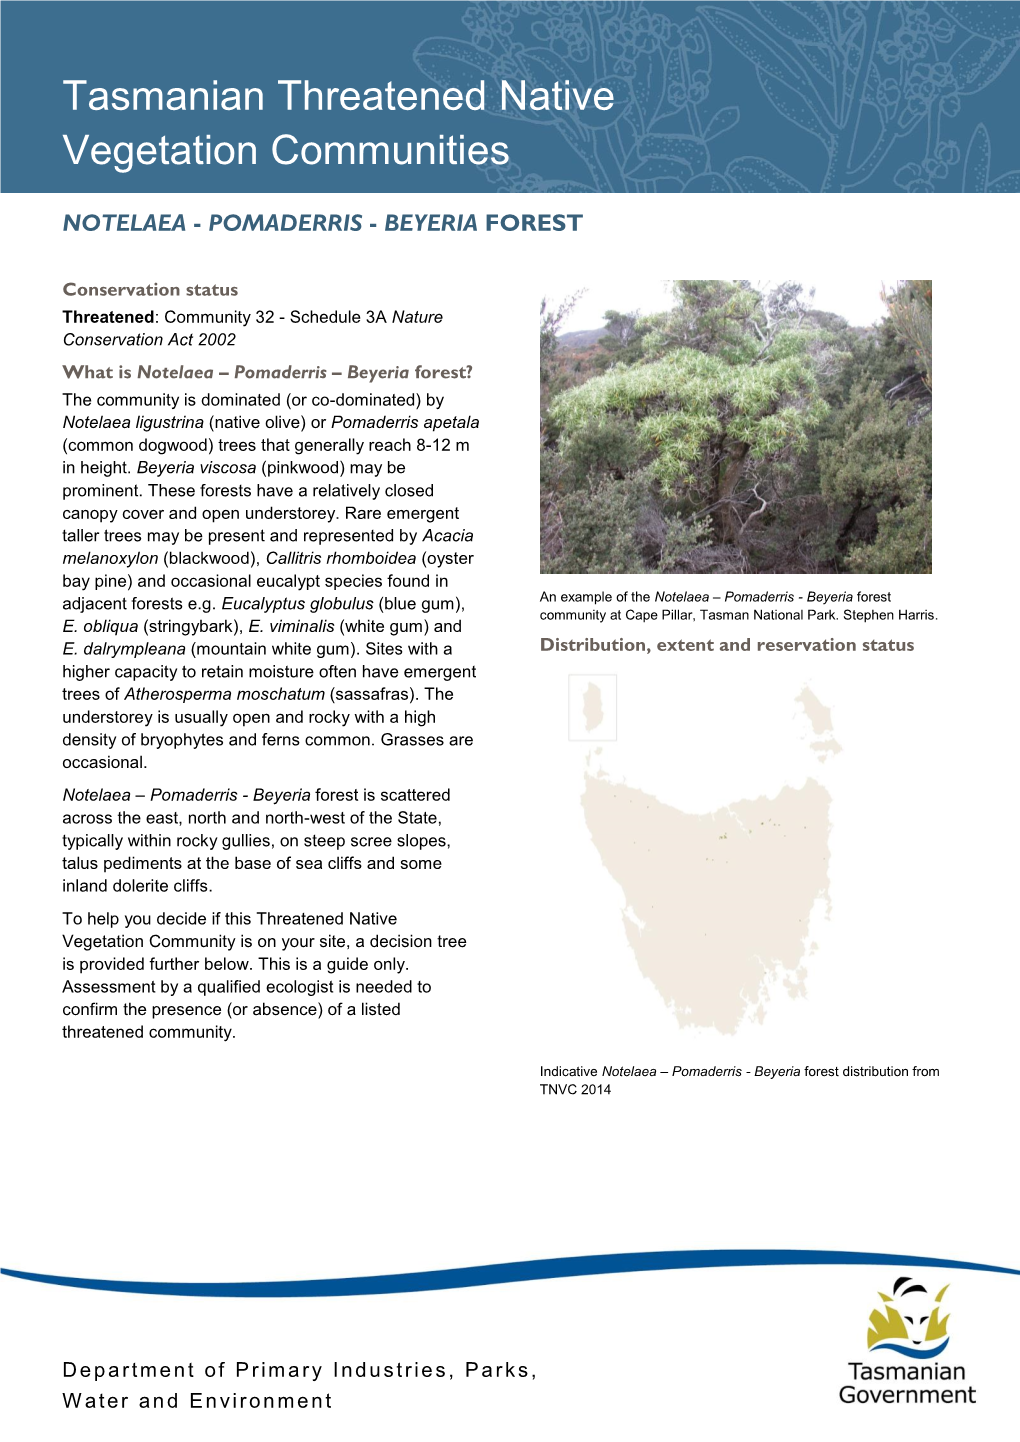 Tasmanian Threatened Native Vegetation Communities